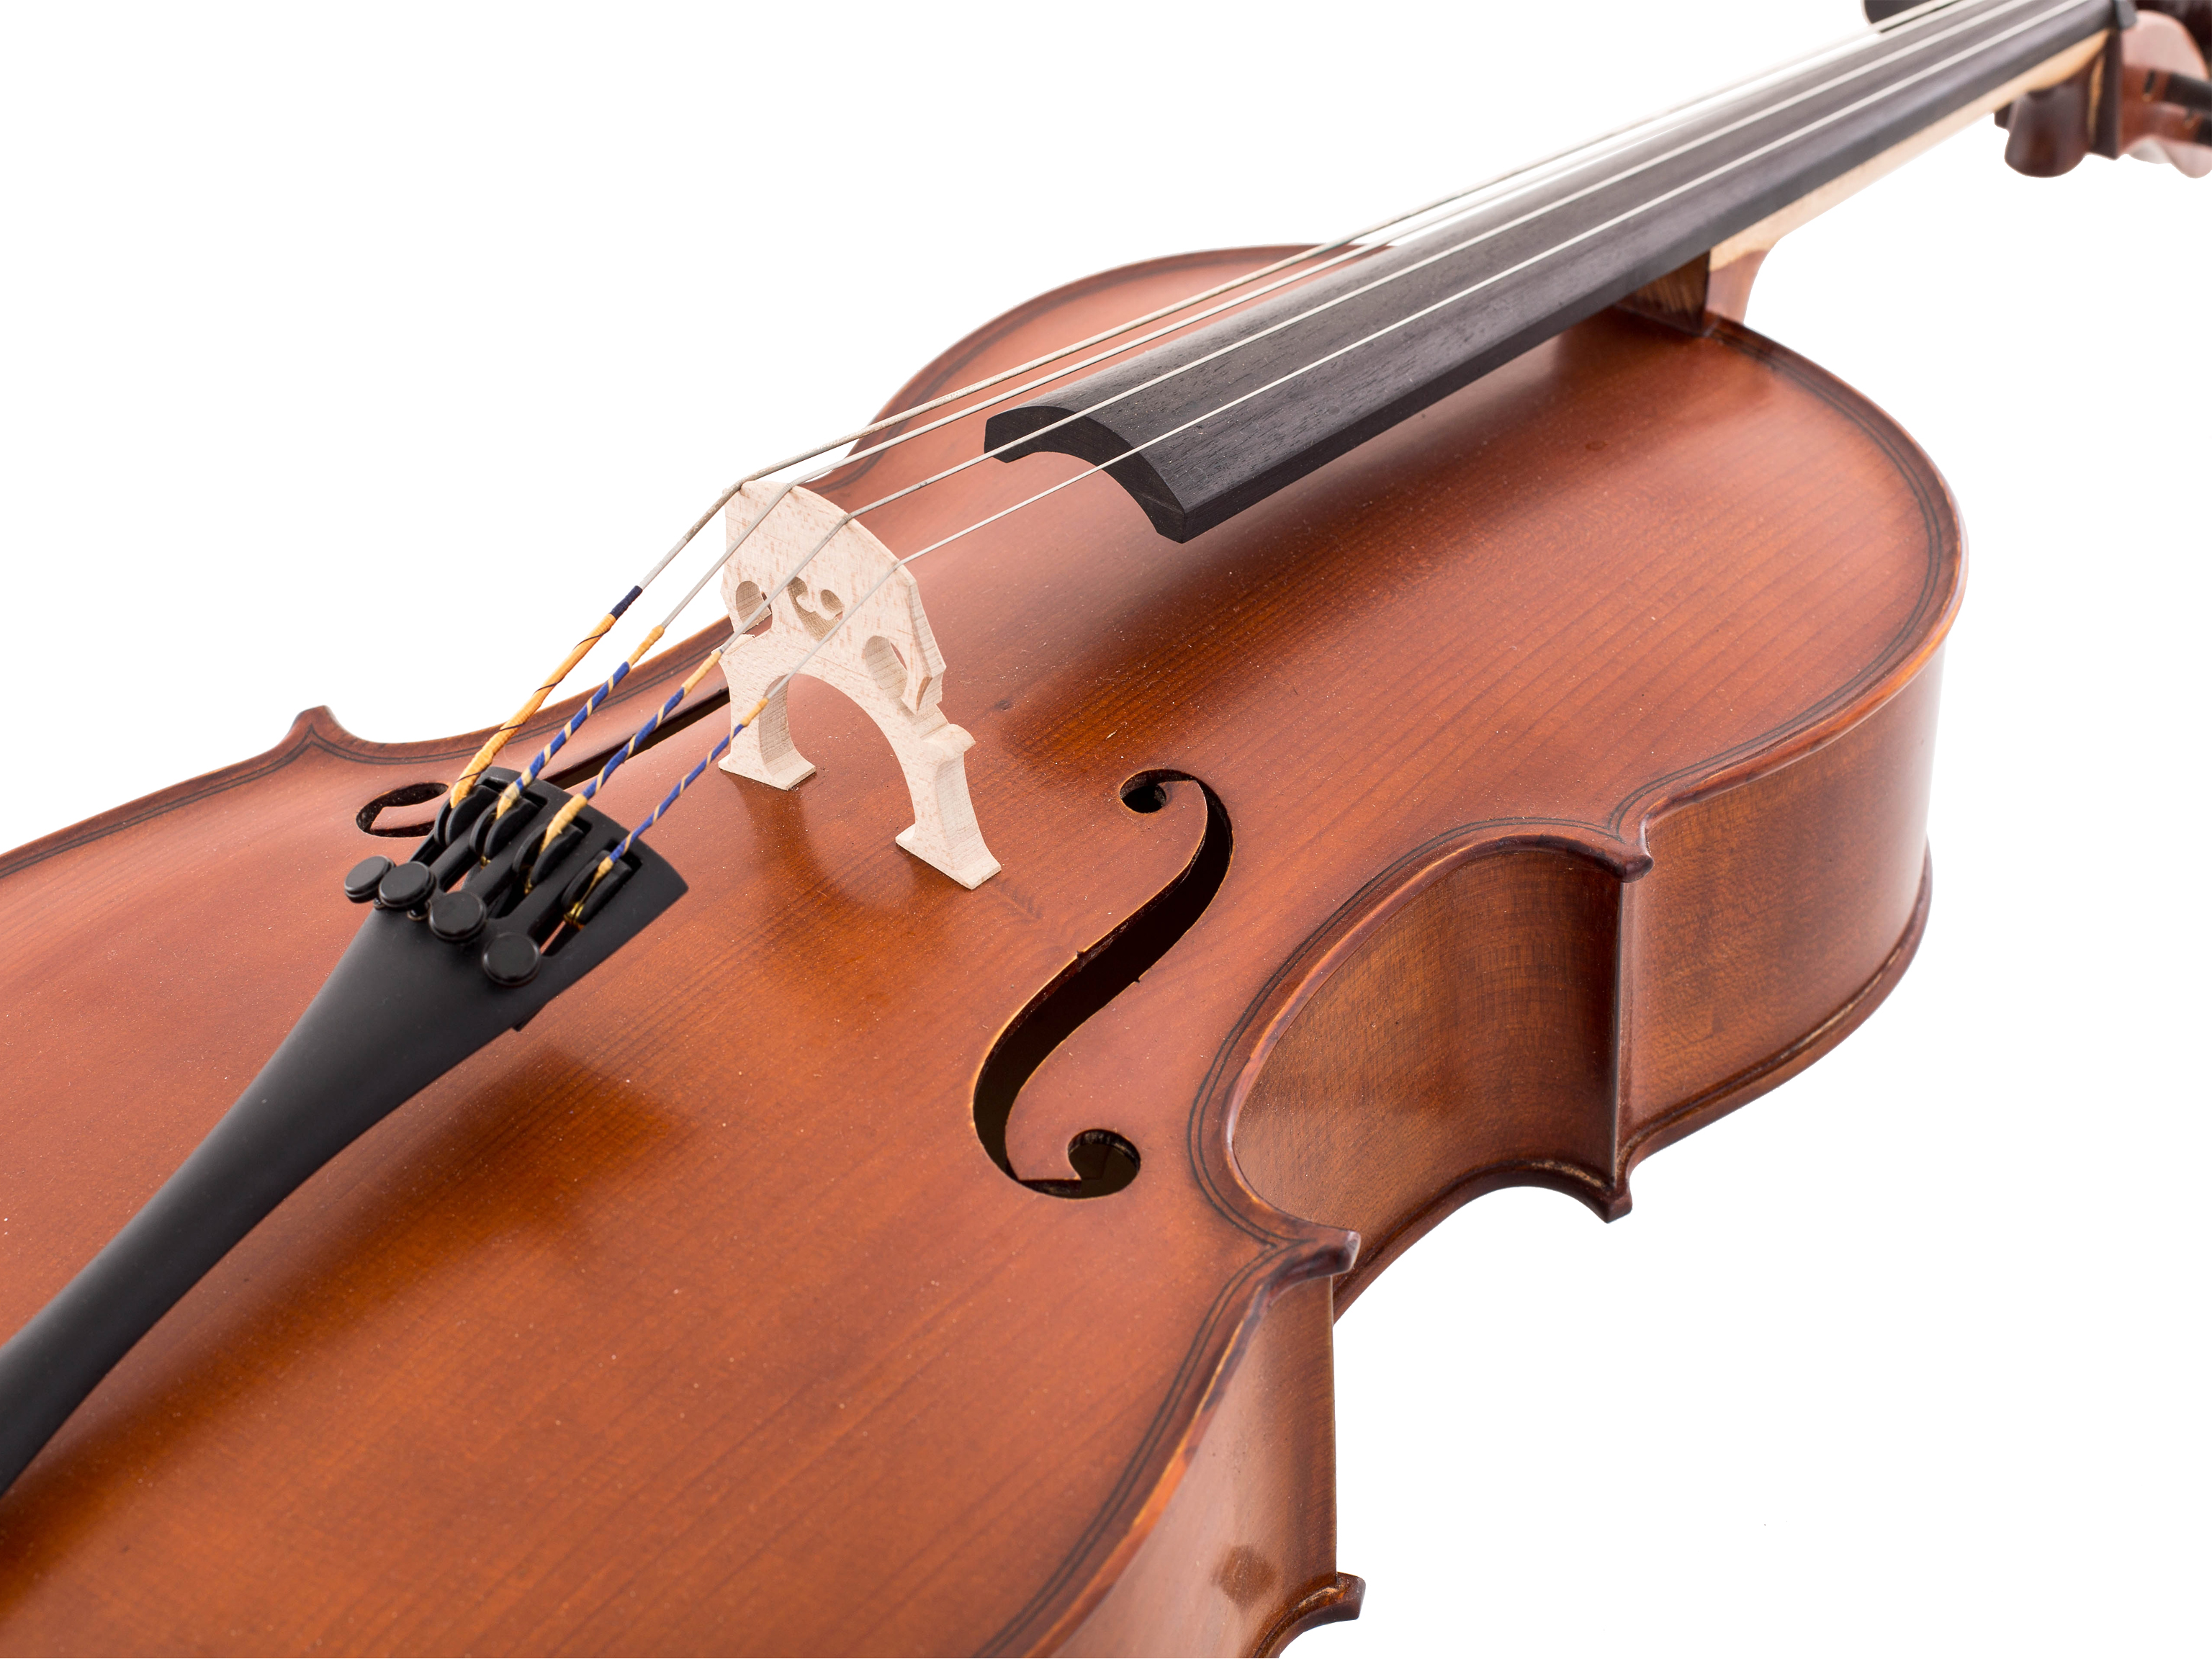 Sandner 8220-1 Cello 4/4 Schülermodell